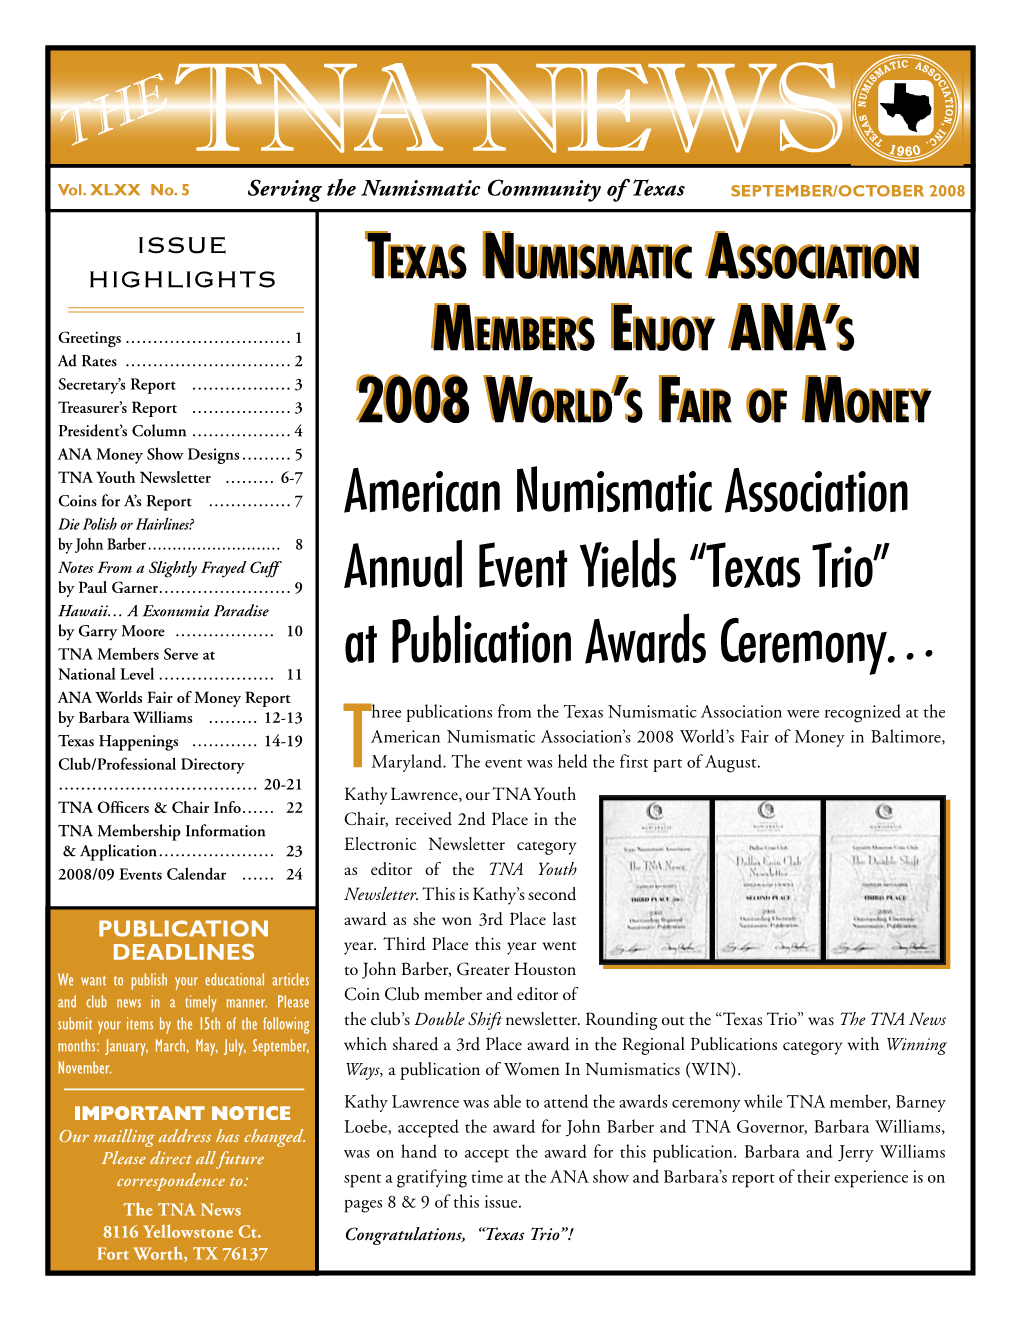 American Numismatic Association Annual Event Yields “Texas Trio”